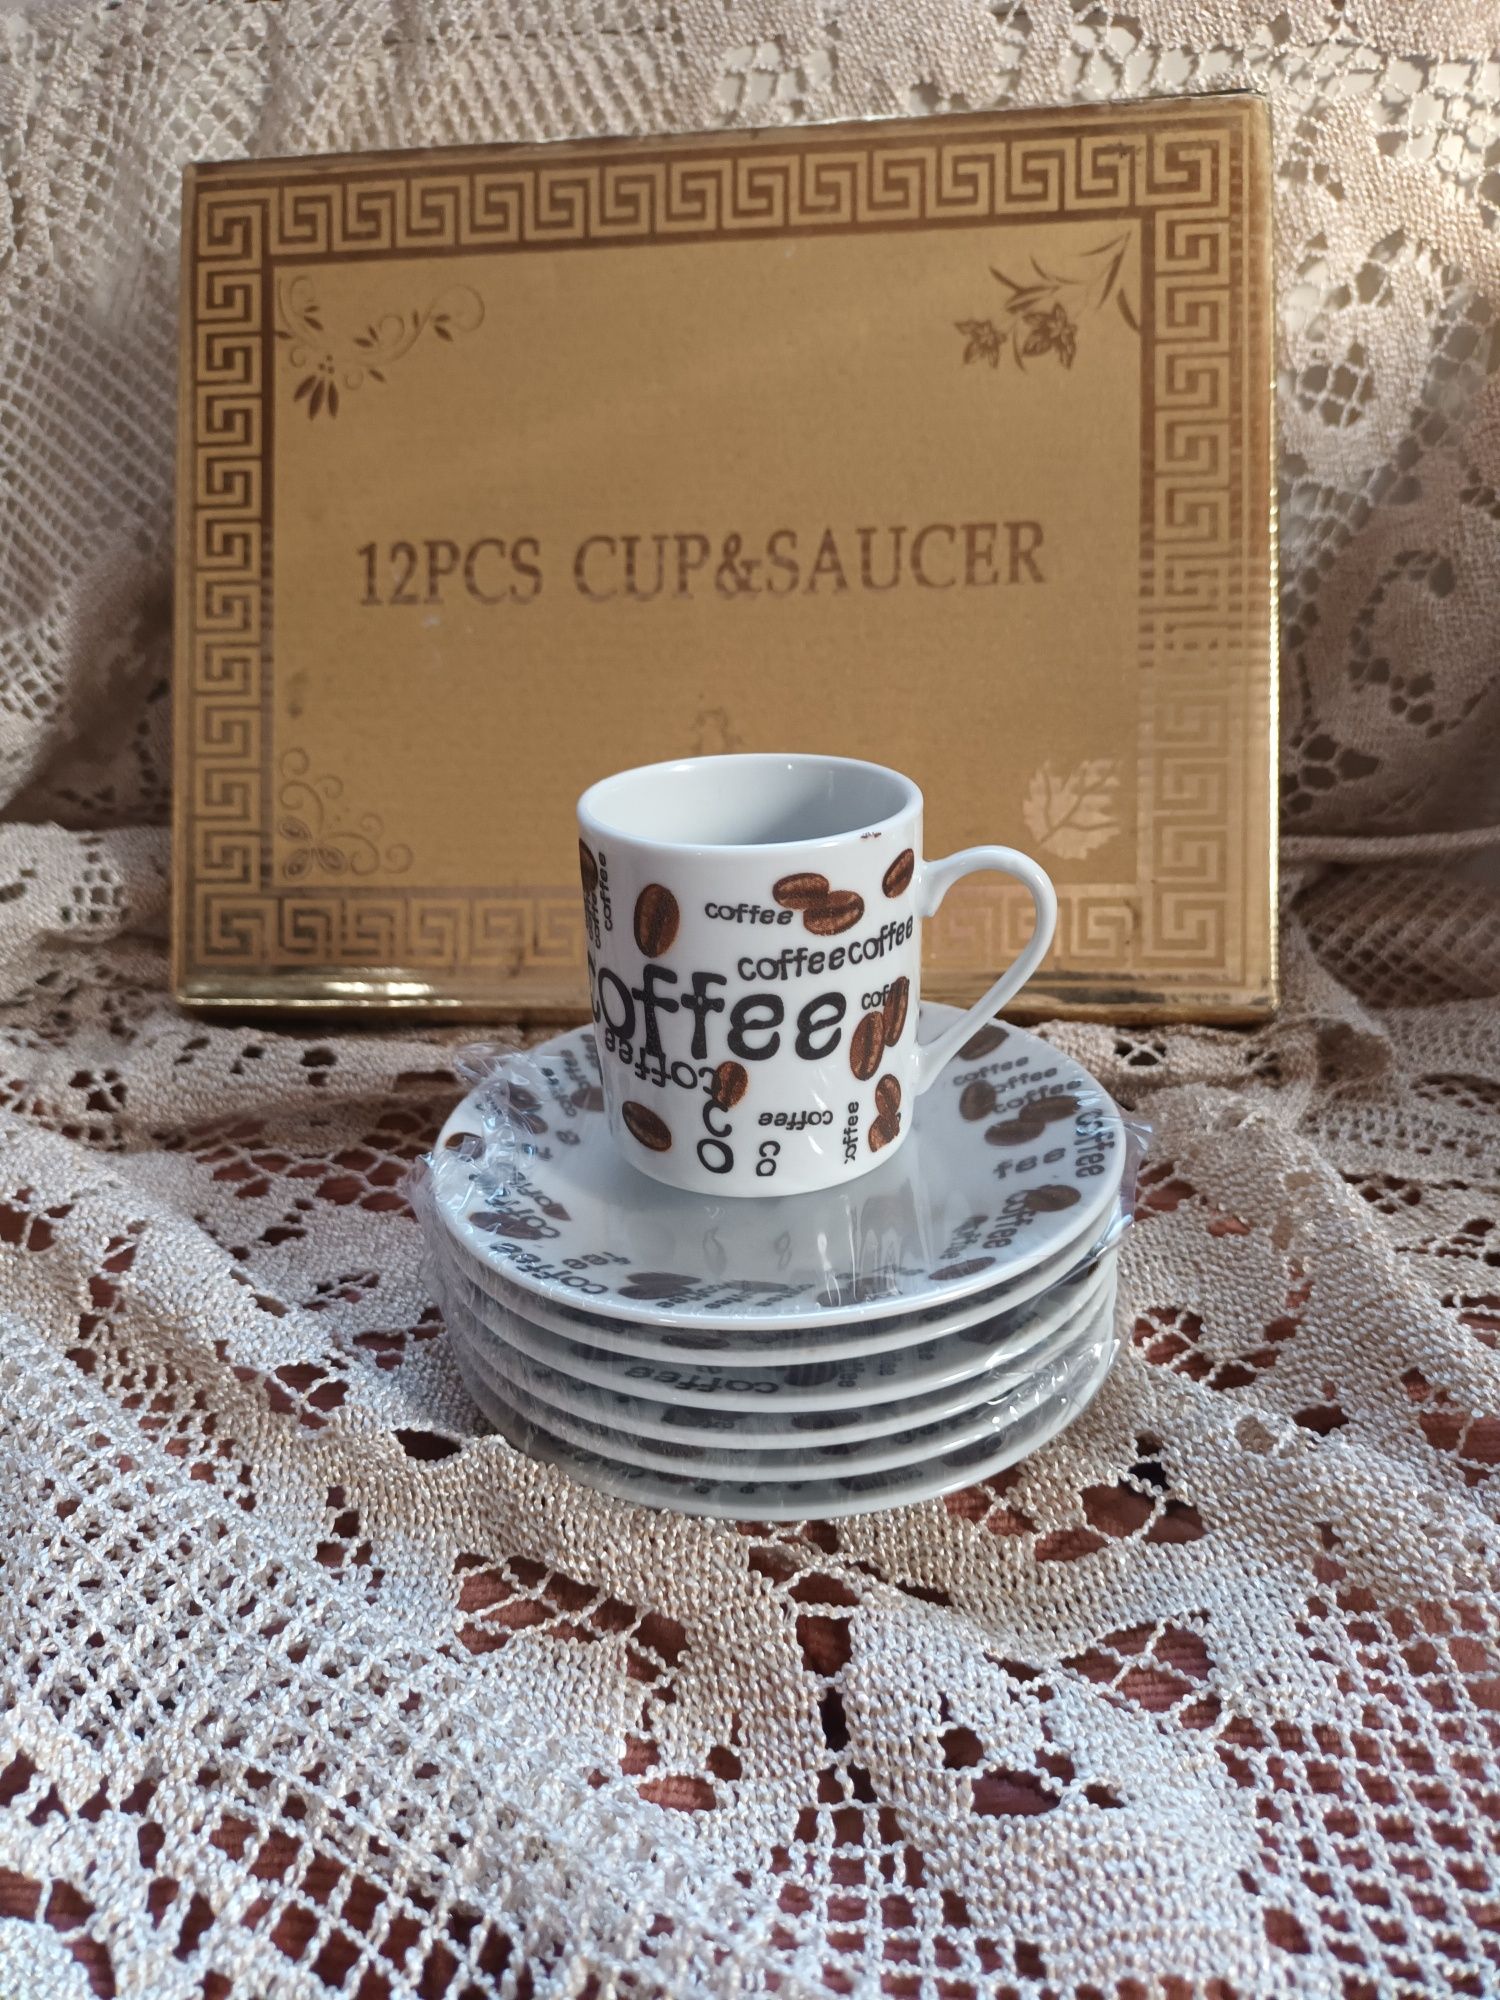 Piękny komplet z porcelany 12 sztuk nowy CUP & SAUCERR